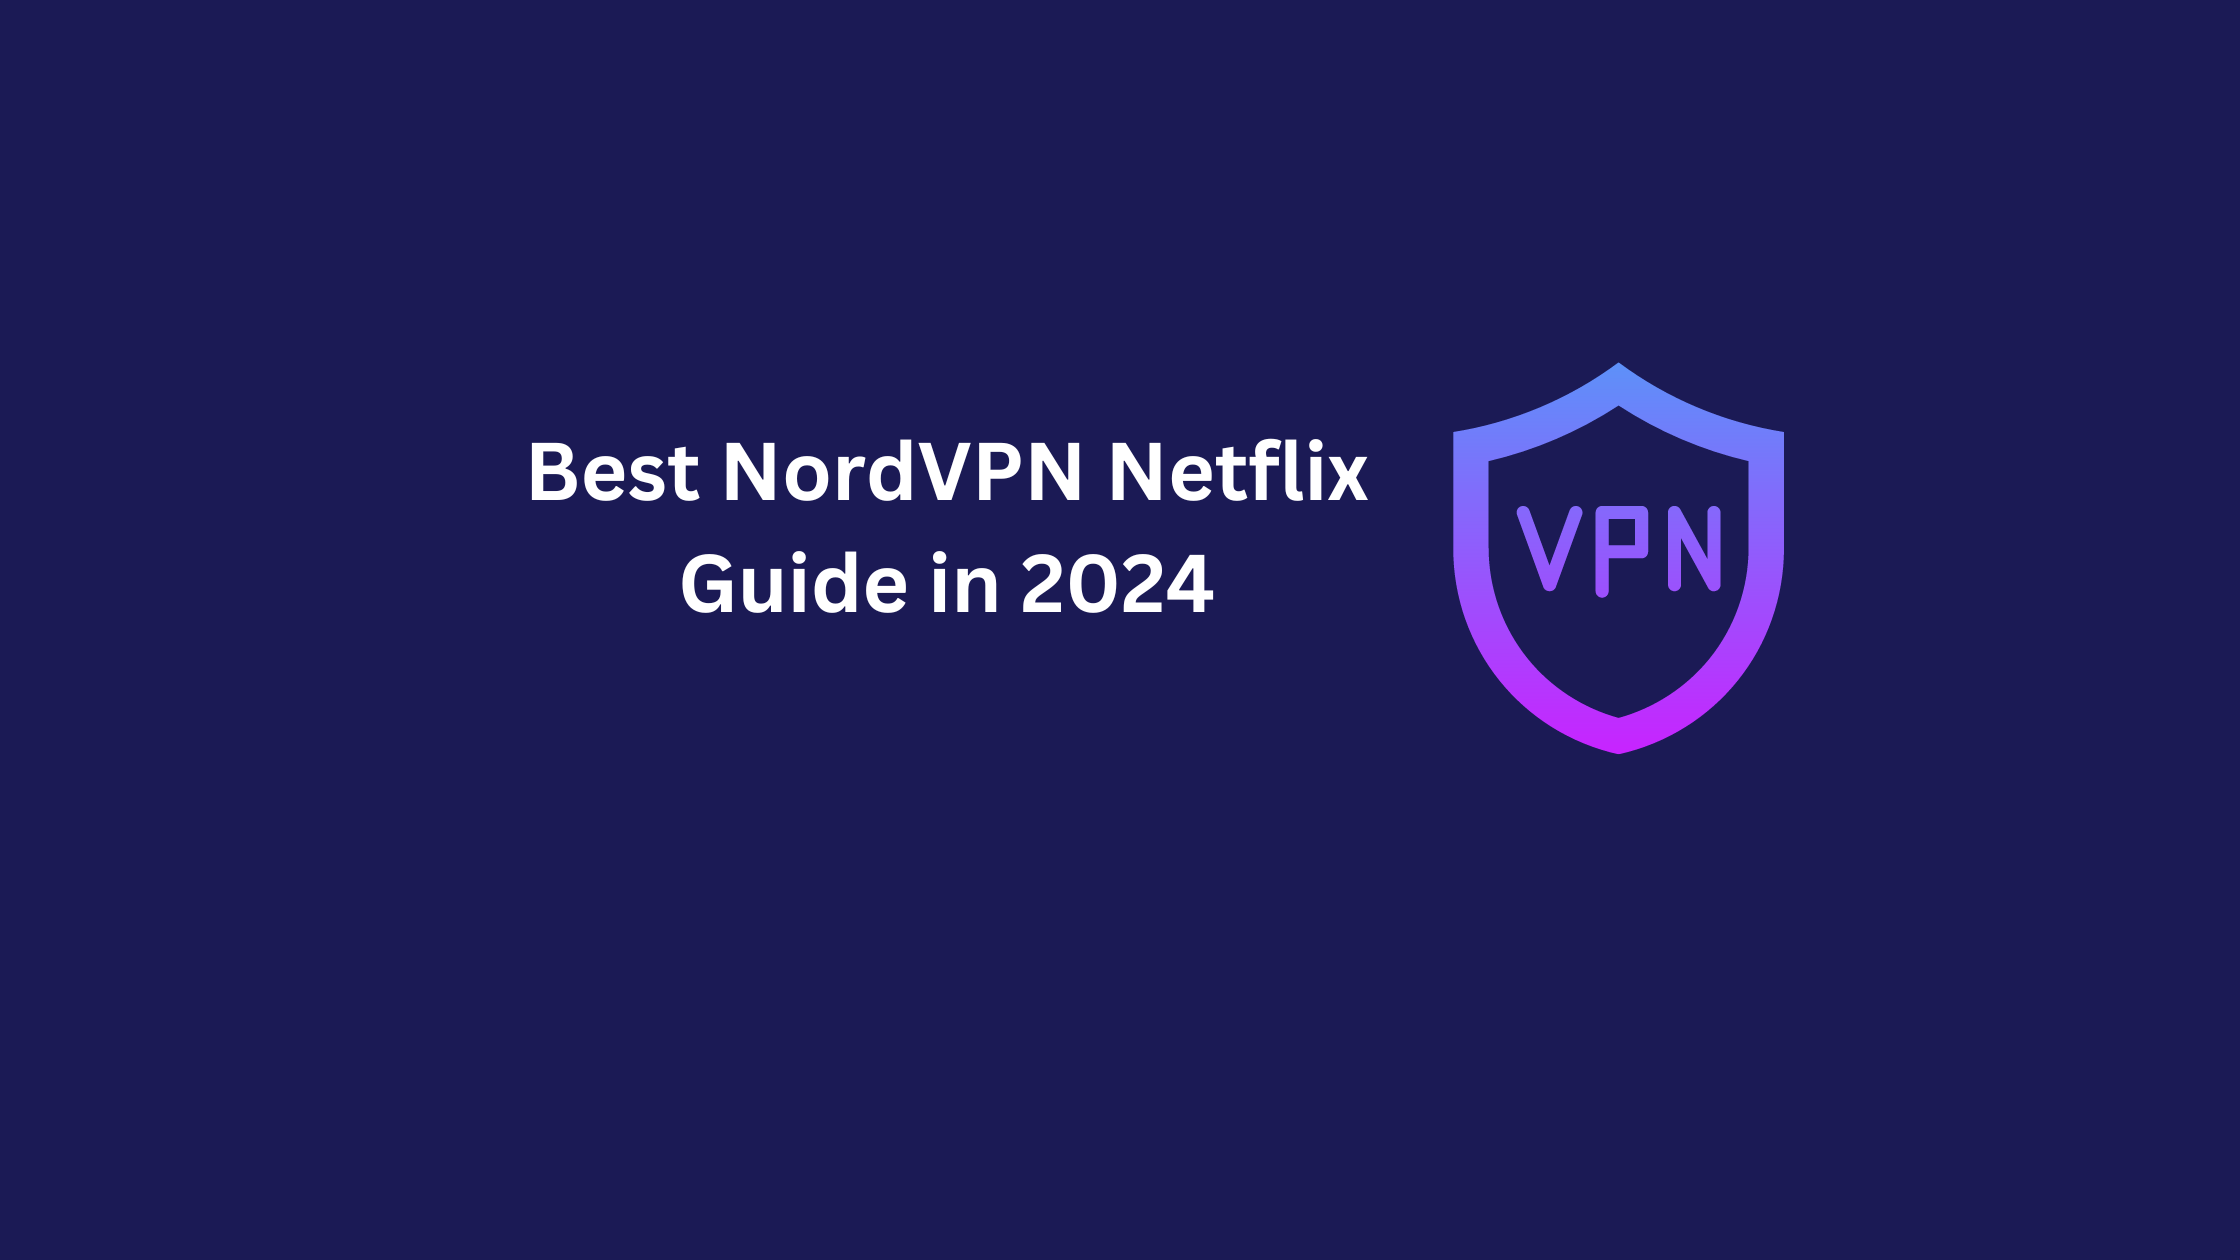 Best NordVPN Netflix Guide in 2024